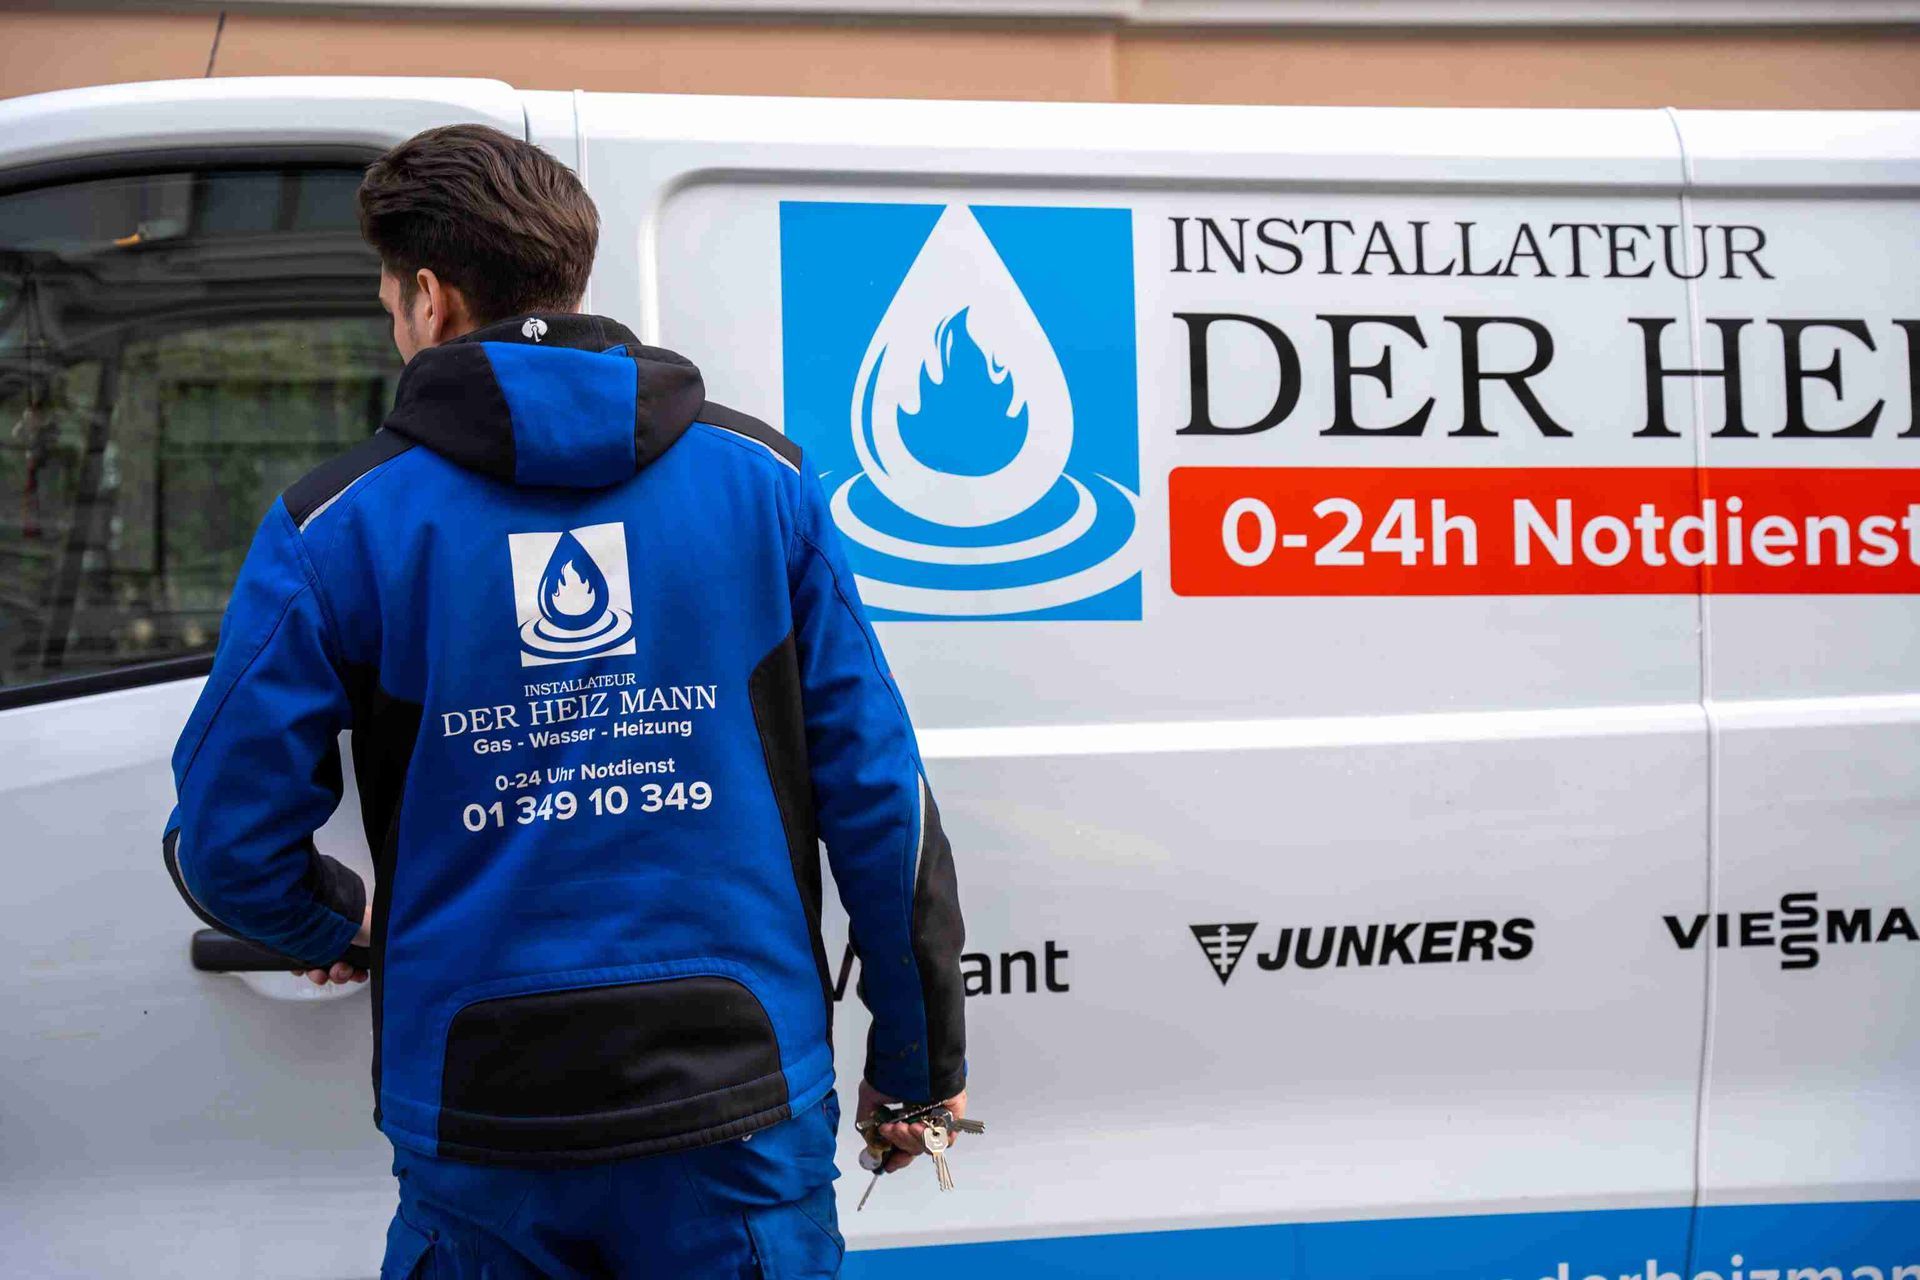 24h Gasgeräte Installateur-Notdienst in Wien 